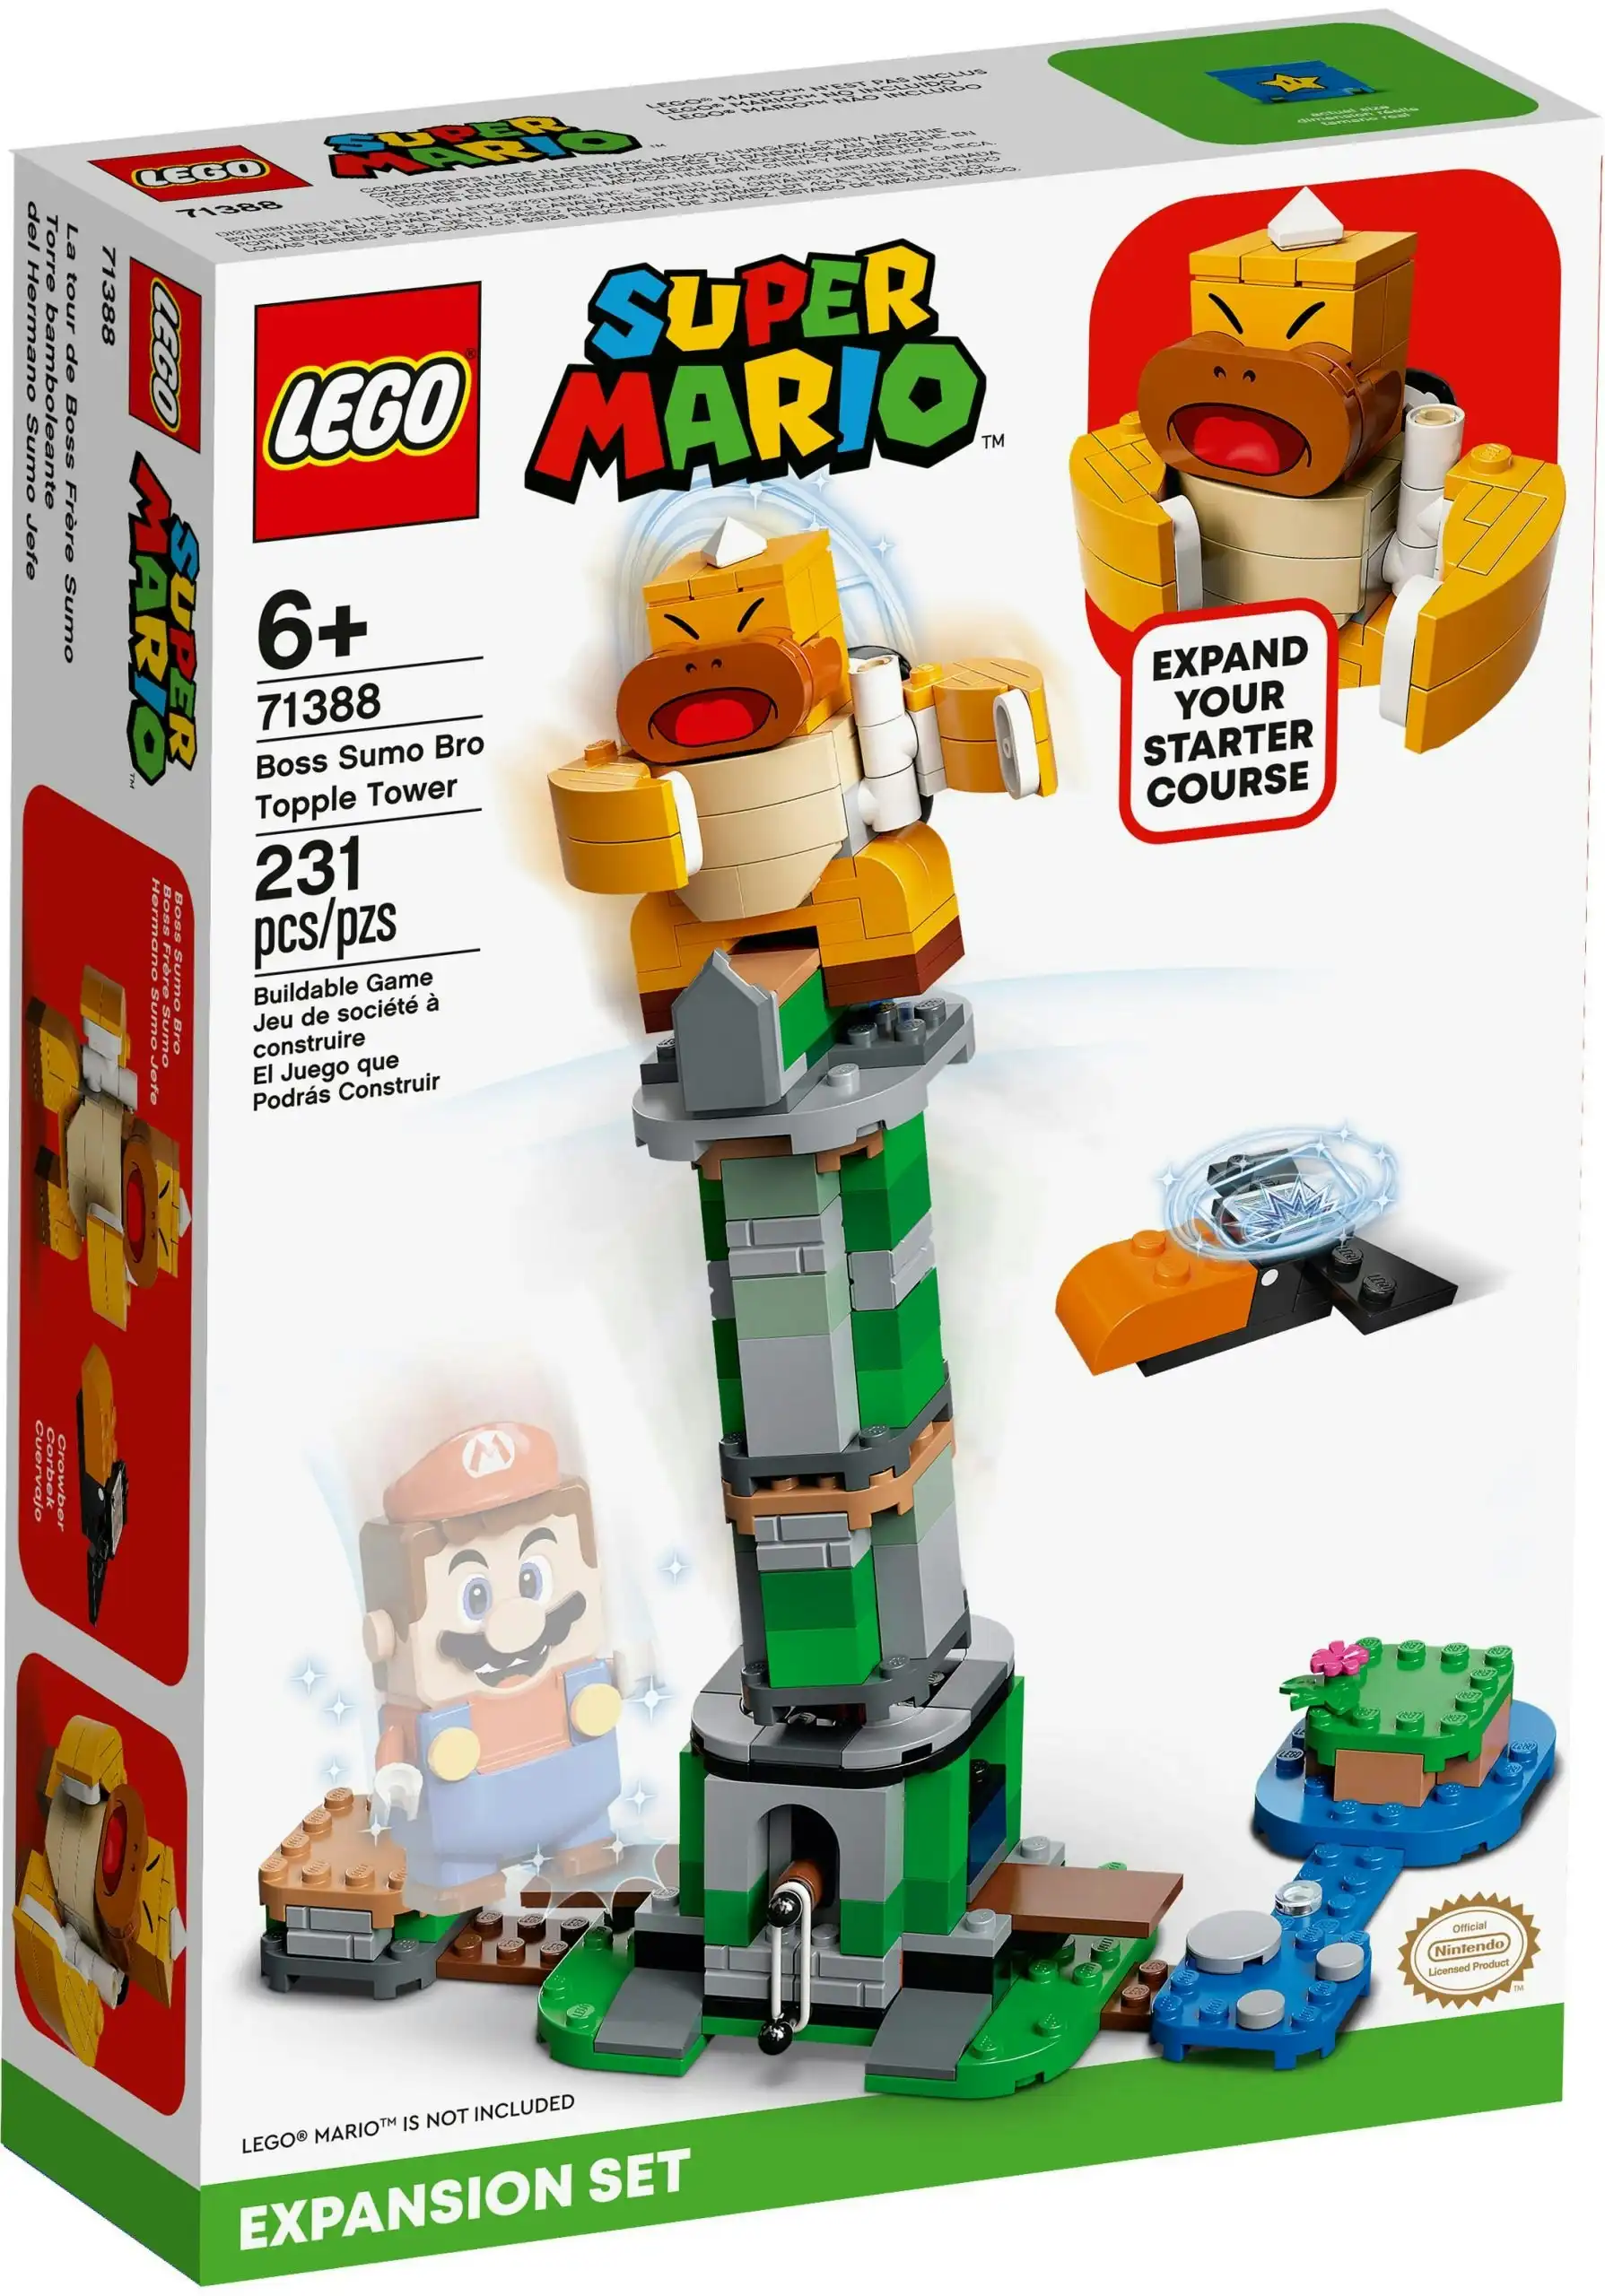 LEGO 71388 Boss Sumo Bro Topple Tower Expansion Set - Super Mario